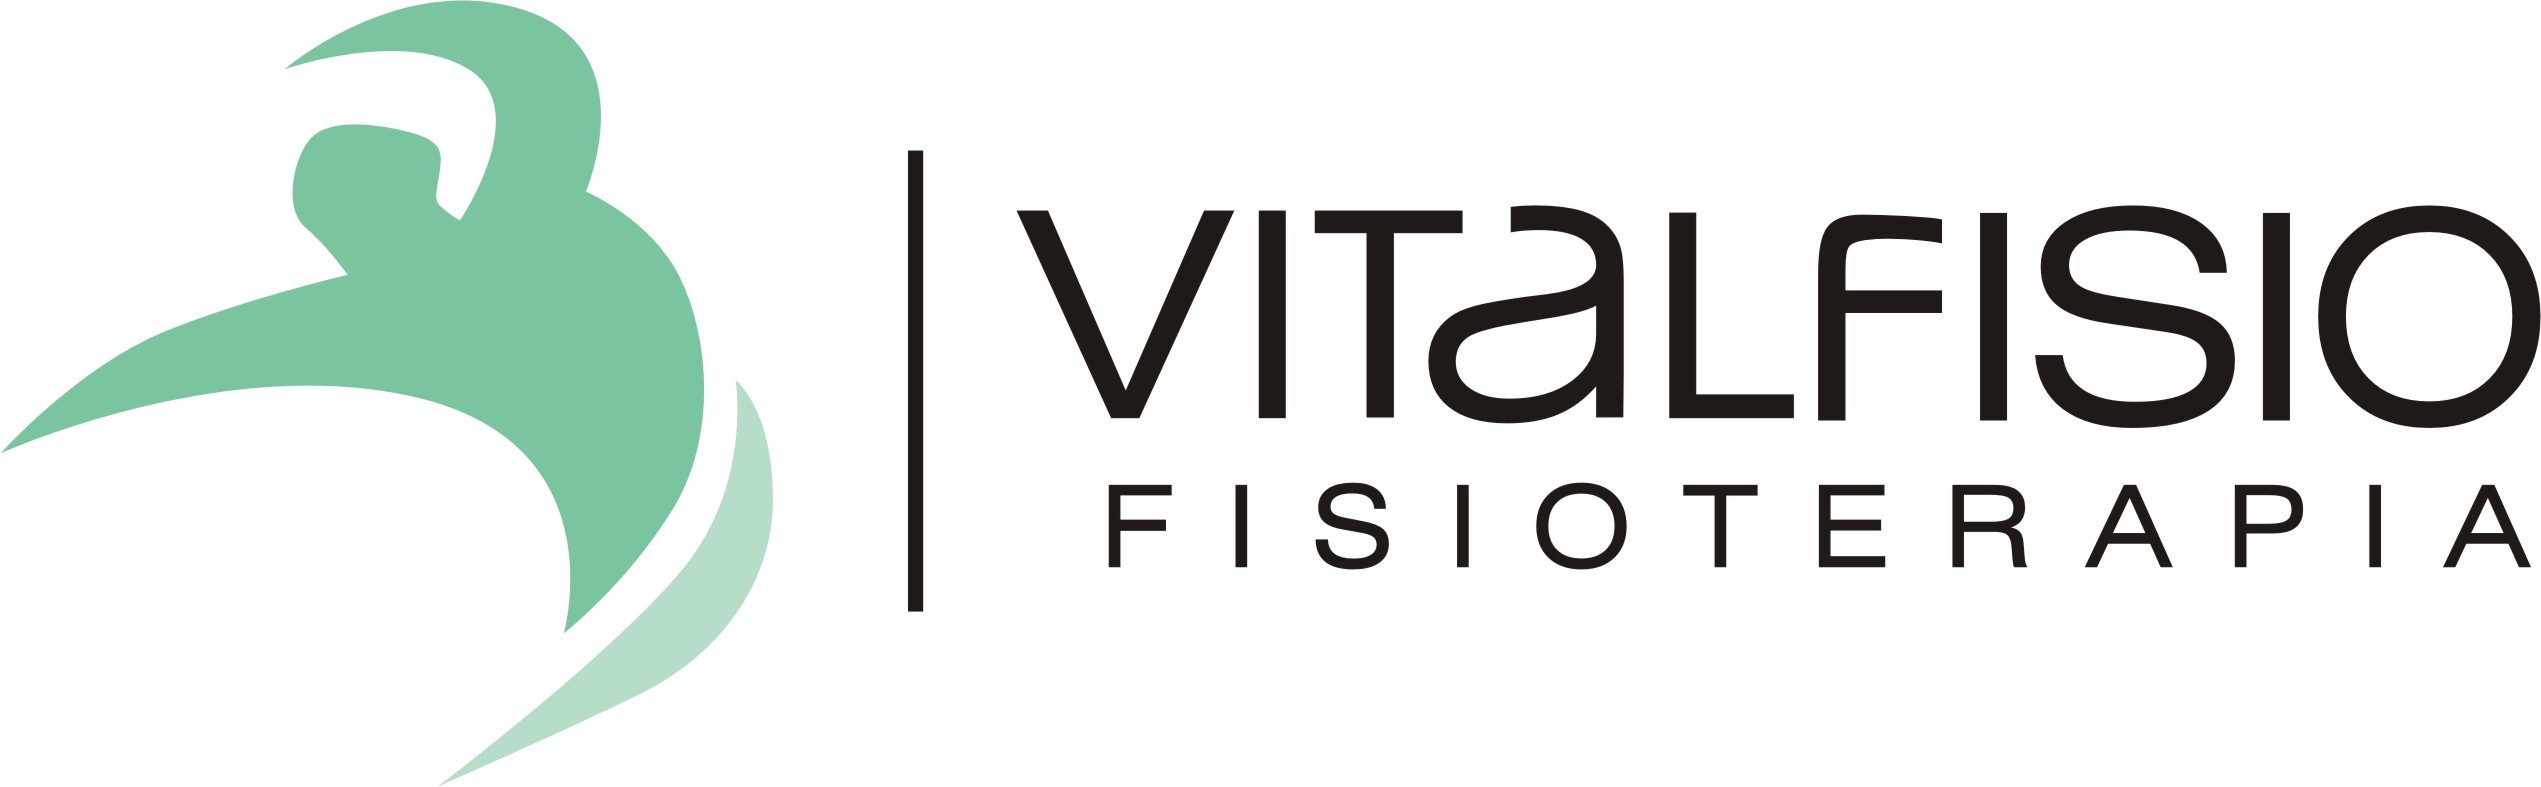 Vitalfisio Logo Wallpaper